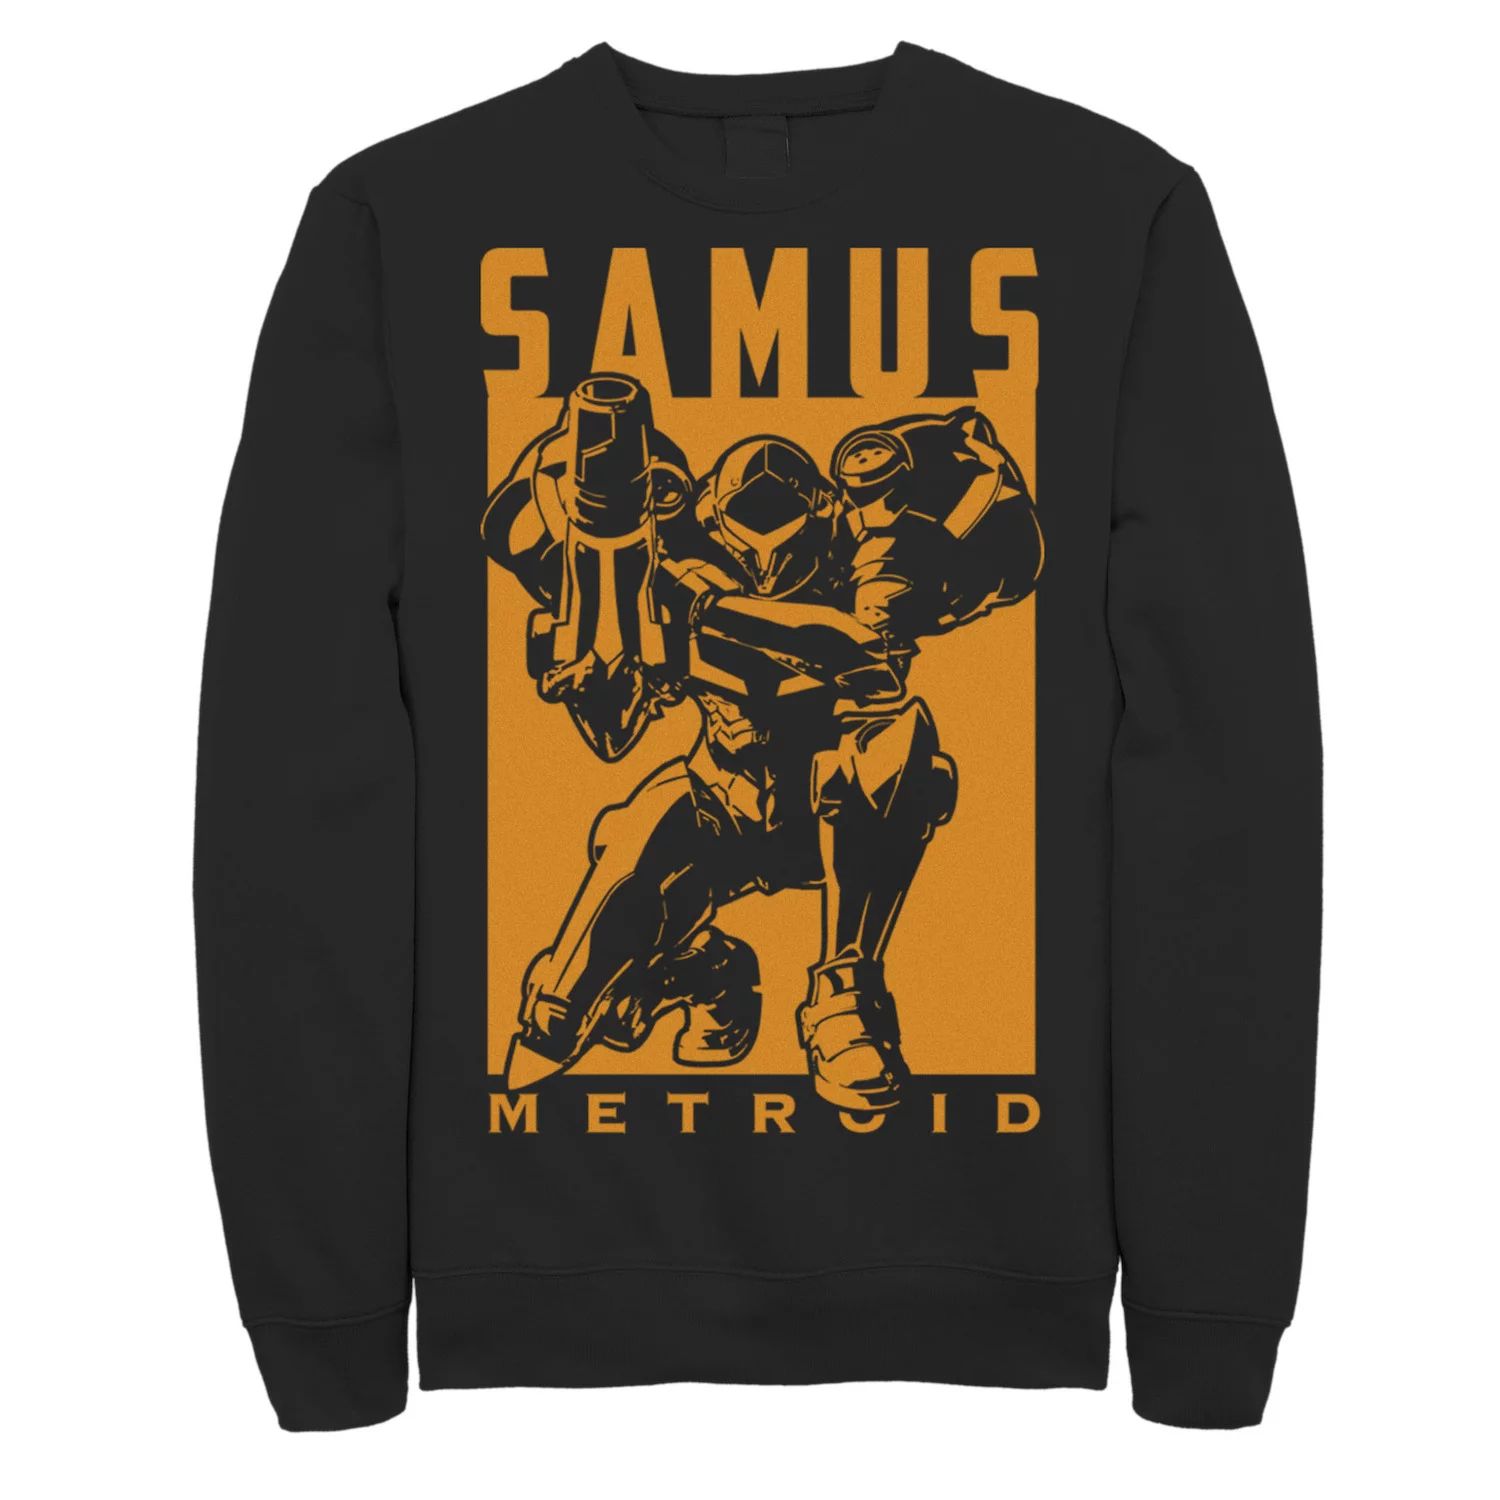 Мужская флисовая рубашка Nintendo Metroid Samus Returns Warrior Pose Licensed Character swtich amiibo карта galaxy warrior связь sahms emmi metroid dread